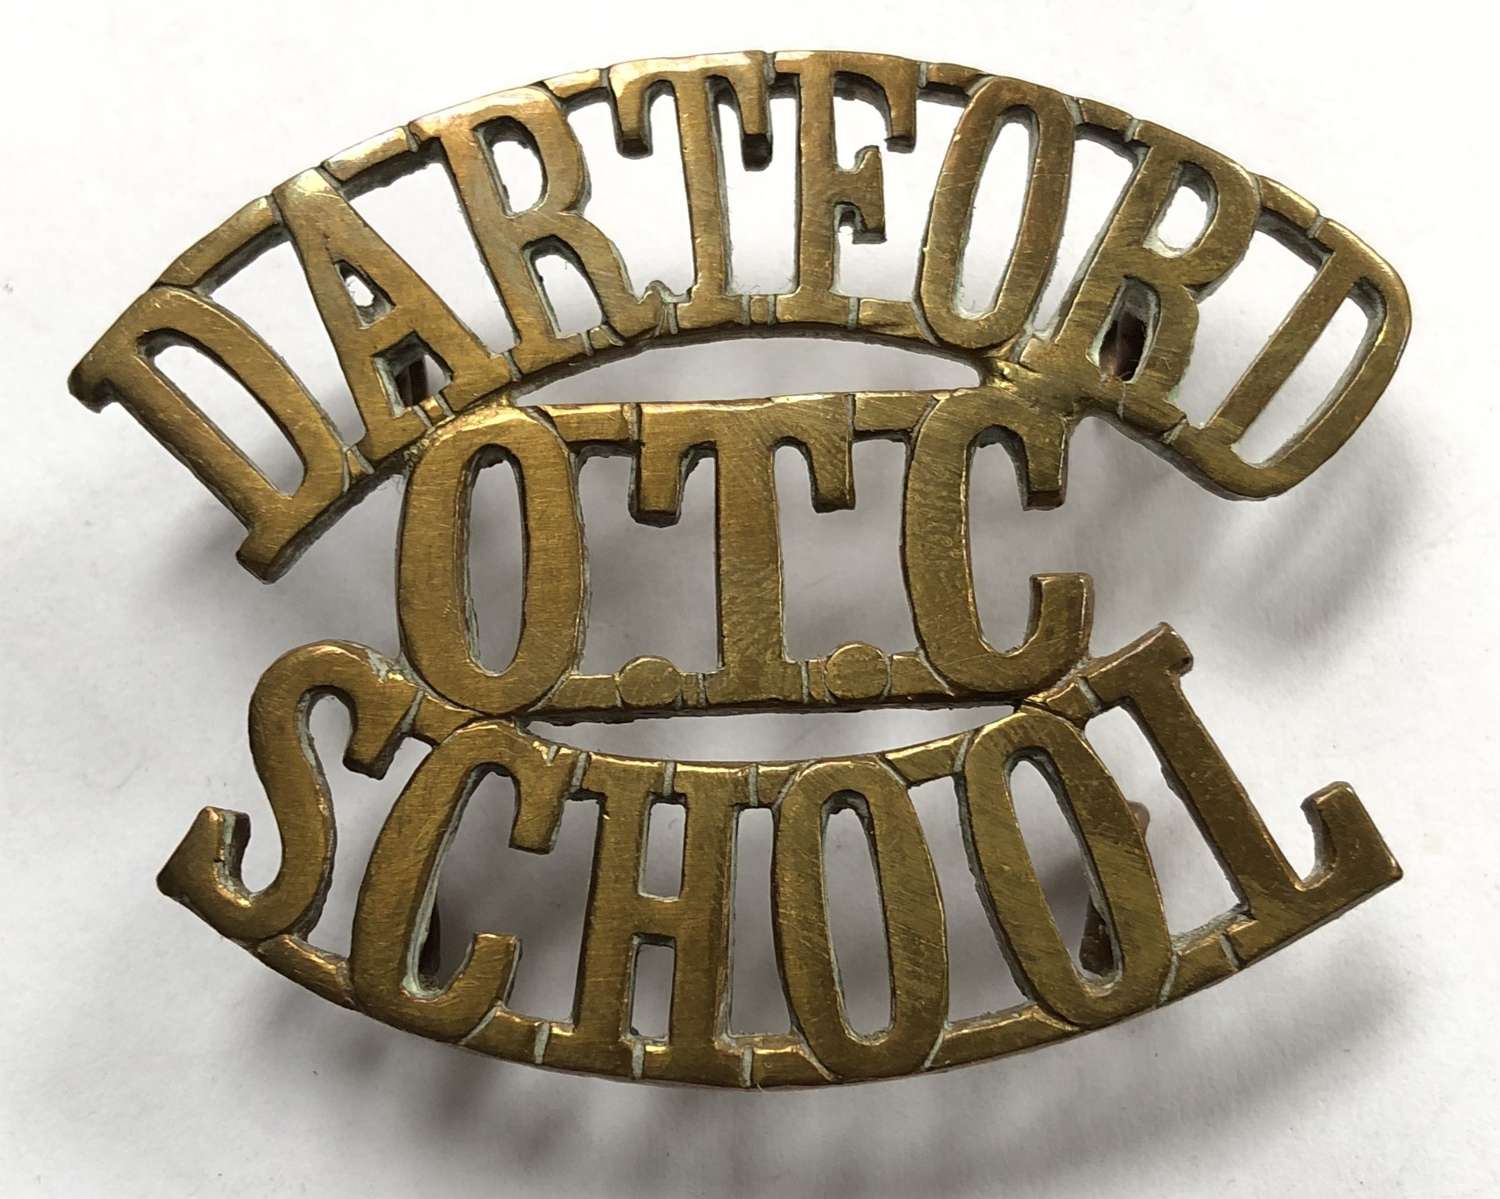 DARTFORD / OTC / SCHOOL shoulder title c1908-40